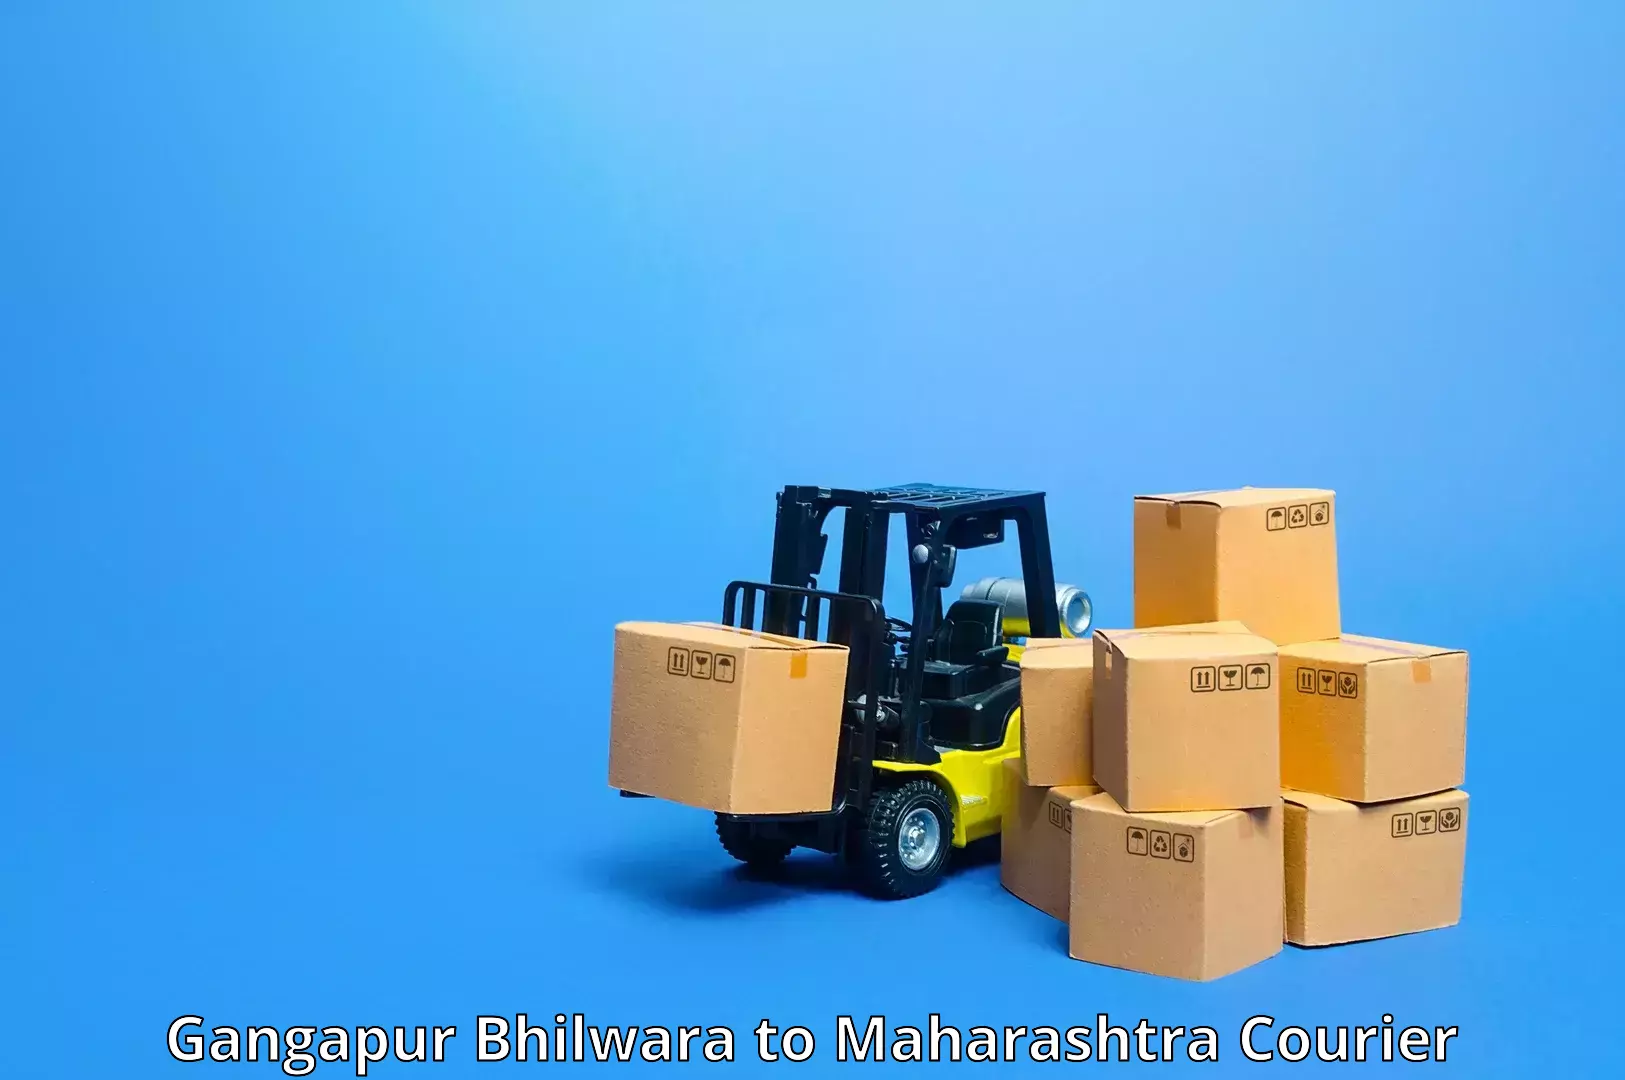 Doorstep delivery service Gangapur Bhilwara to Maharashtra